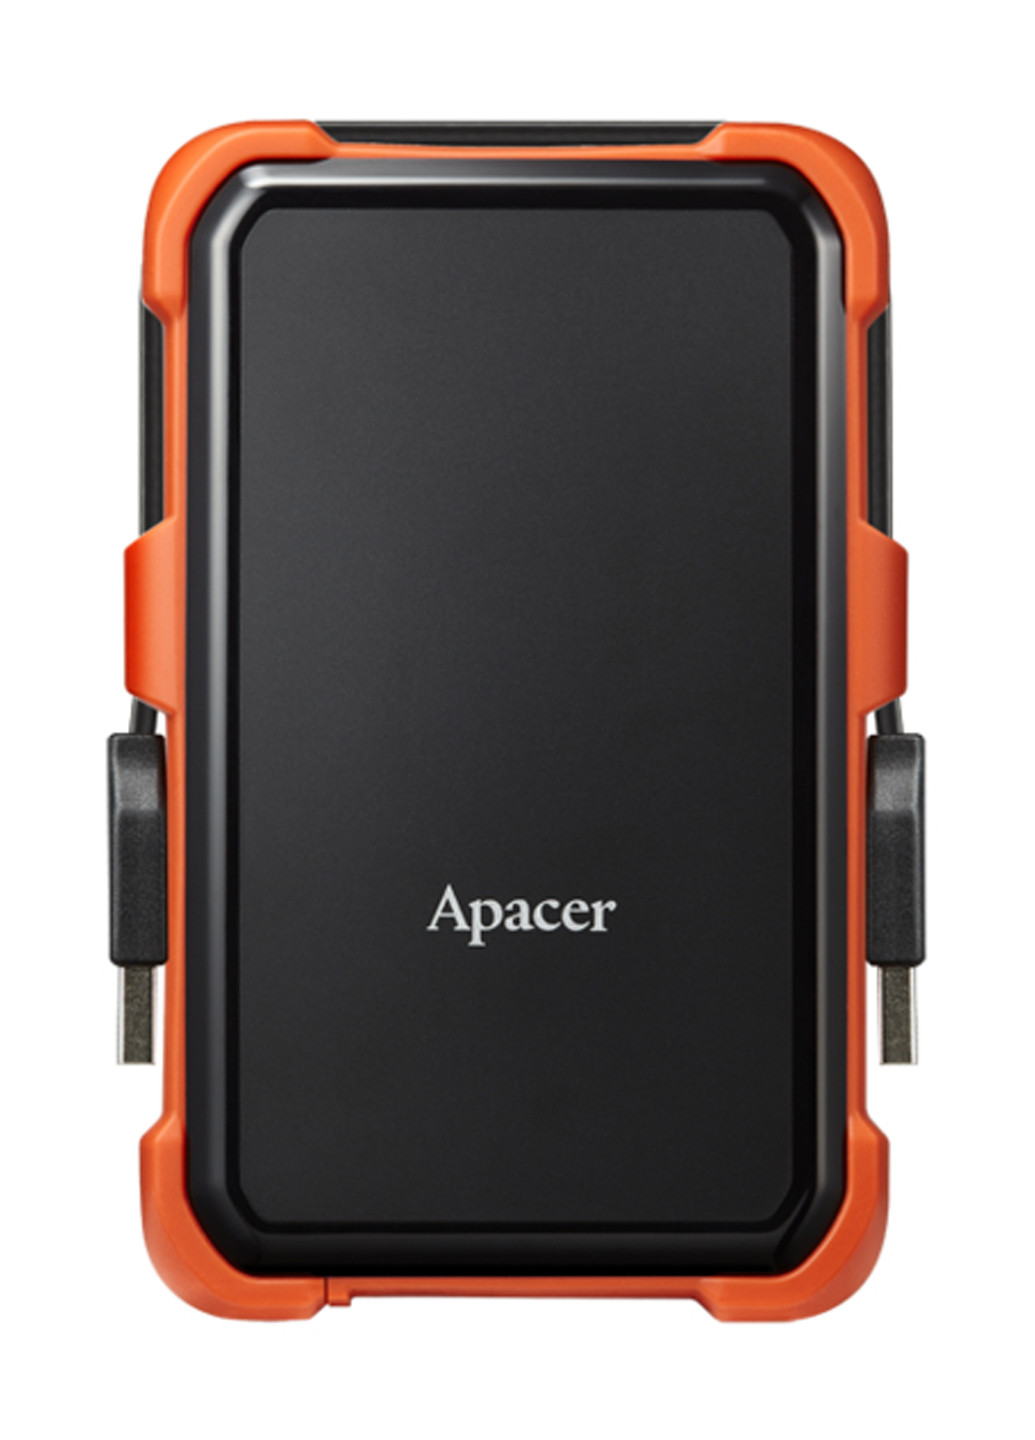 Внешний жесткий диск AC630 1TB 5400rpm 8MB AP1TBAC630T-1 2.5" USB 3.1 External Orange (AP1TBAC630T-1) Apacer внешний жесткий диск apacer ac630 1tb 5400rpm 8mb ap1tbac630t-1 2.5" usb 3.1 external orange (ap1tbac630t-1) (135254857)